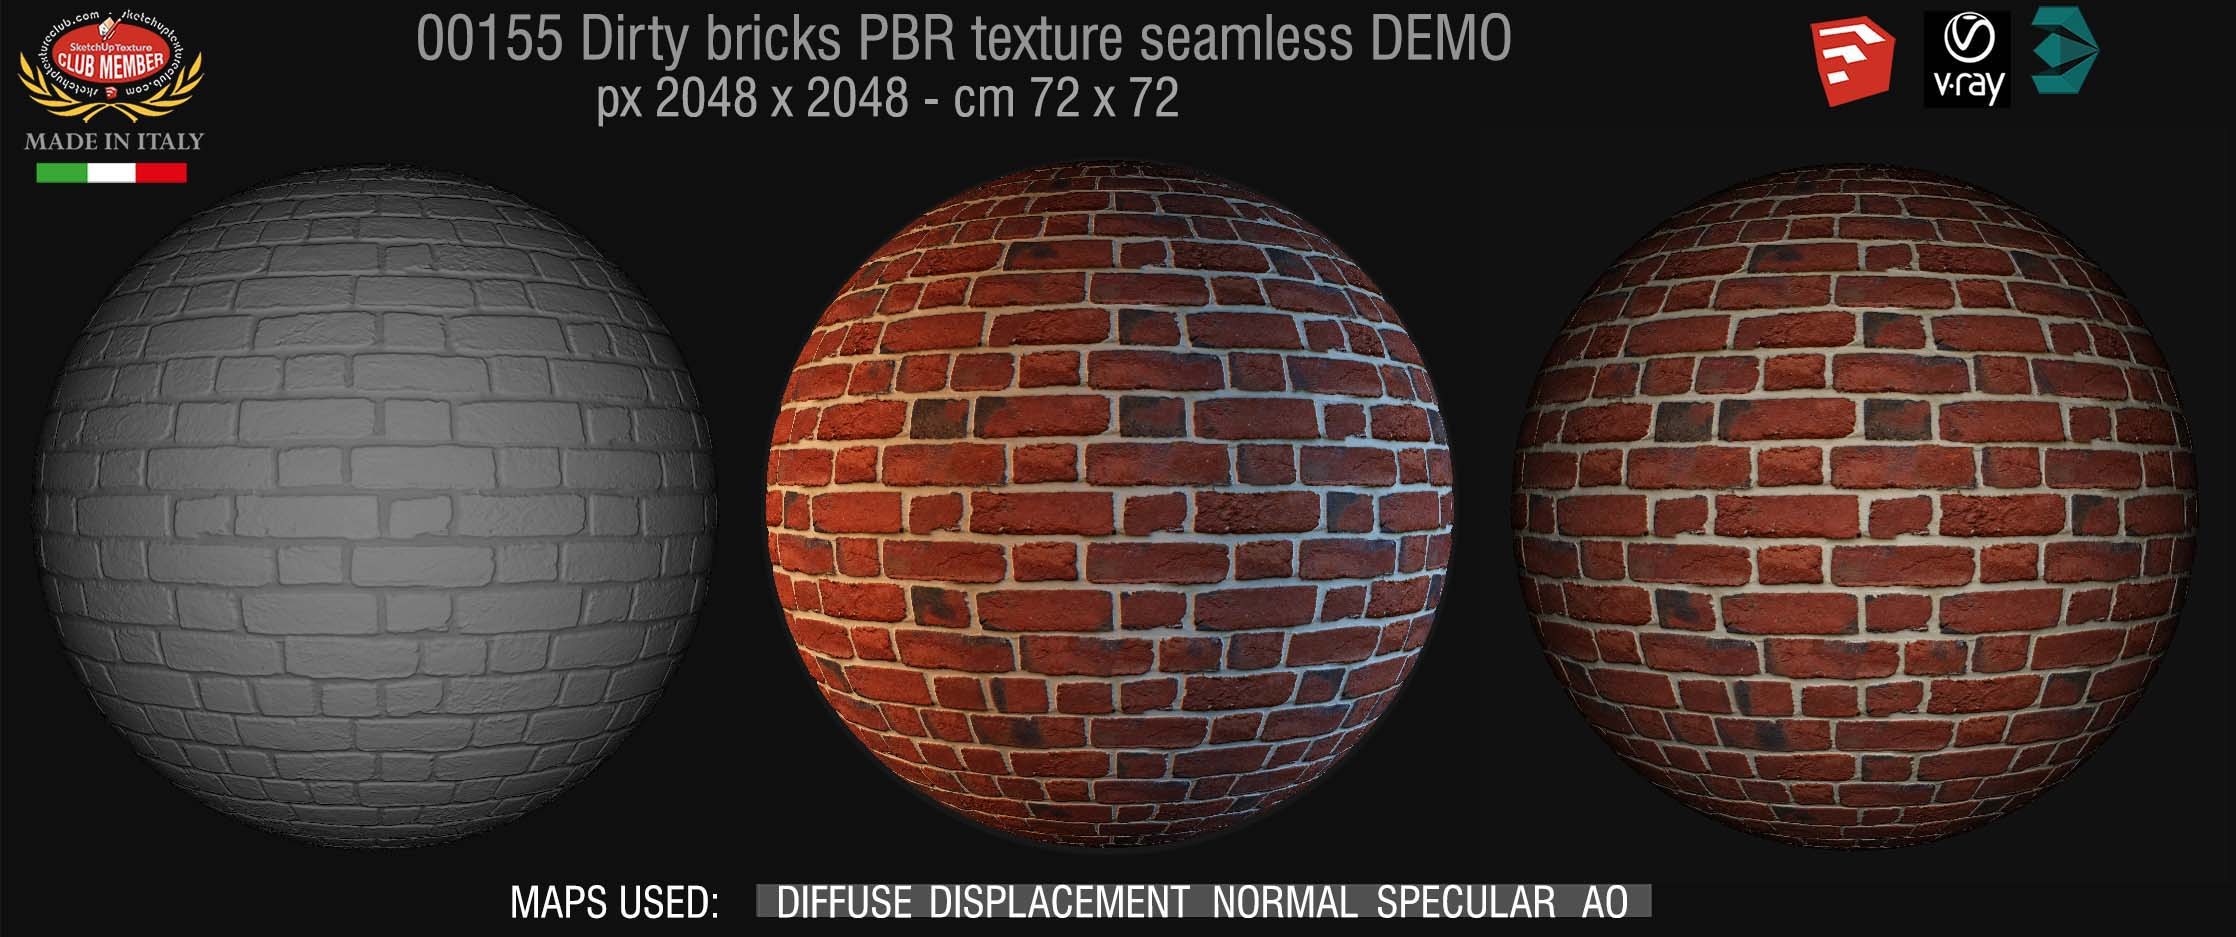 00155 Dirty bricks PBR texture seamless DEMO